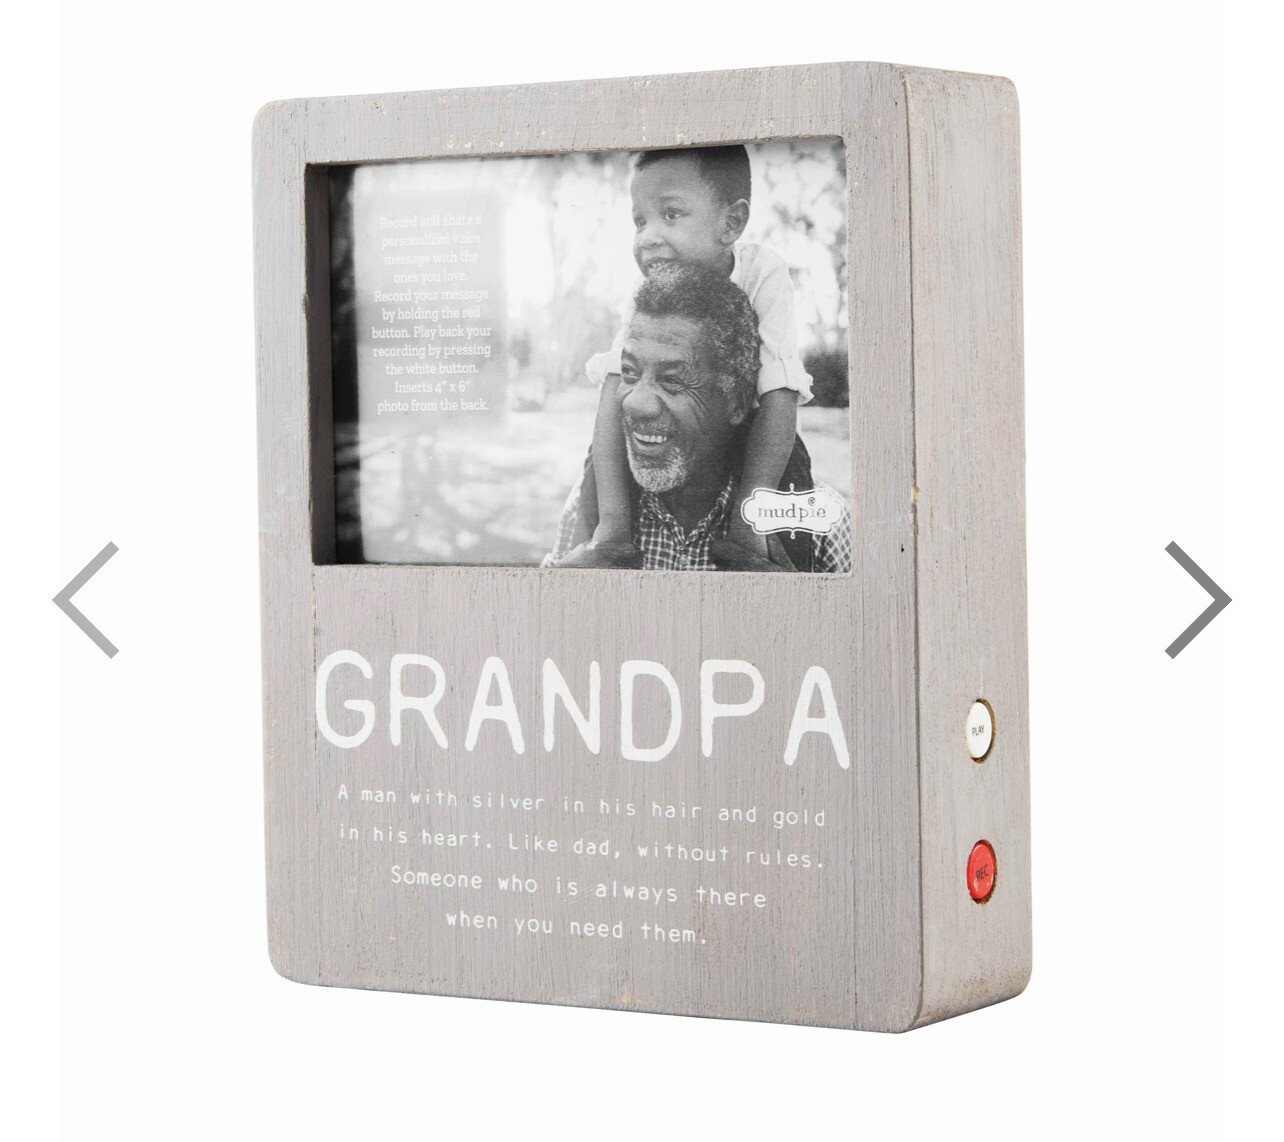 Grandpa Voice Recorded Frame